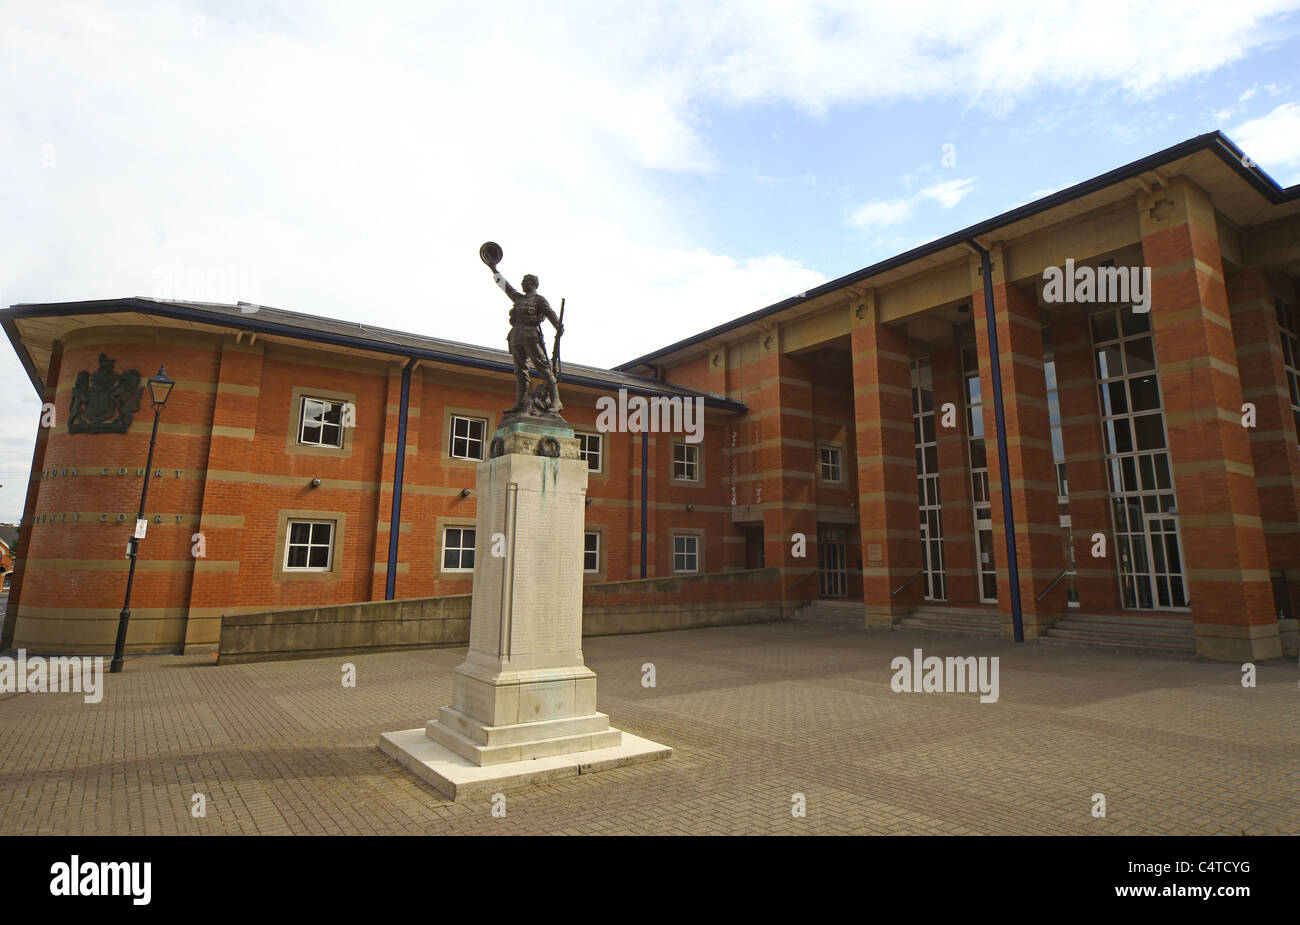 Stafford Crown Court Building, Stafford, Staffordshire, West Midlands, England, UK Banque D'Images